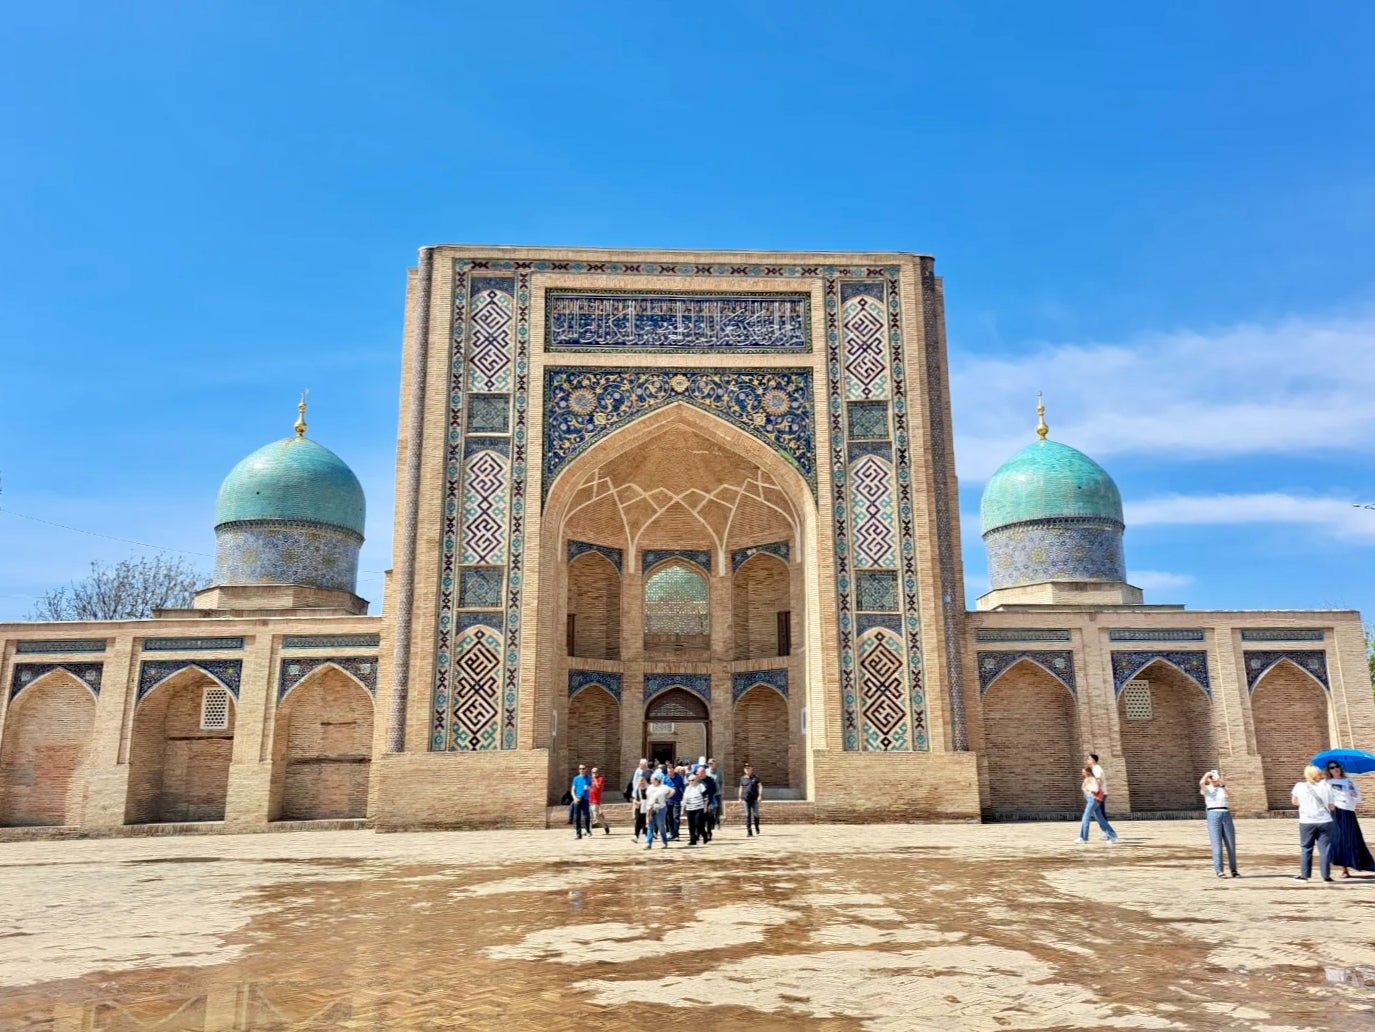 Golden age: Abdulla Murodxo’jayev Mosque in Tashkent, Uzbekistan